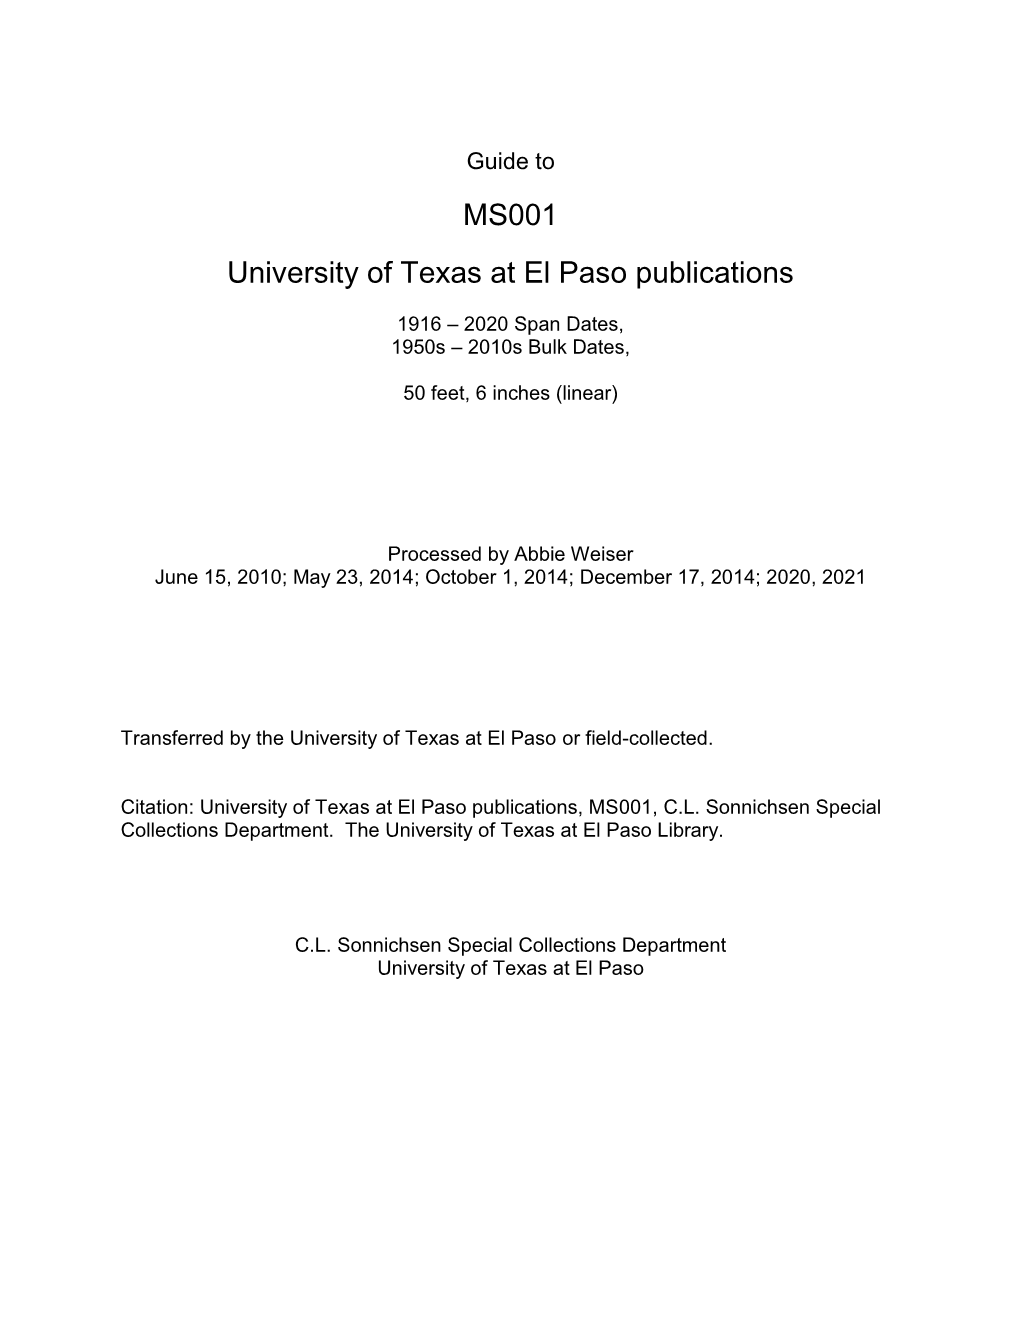 MS001 University of Texas at El Paso Publications